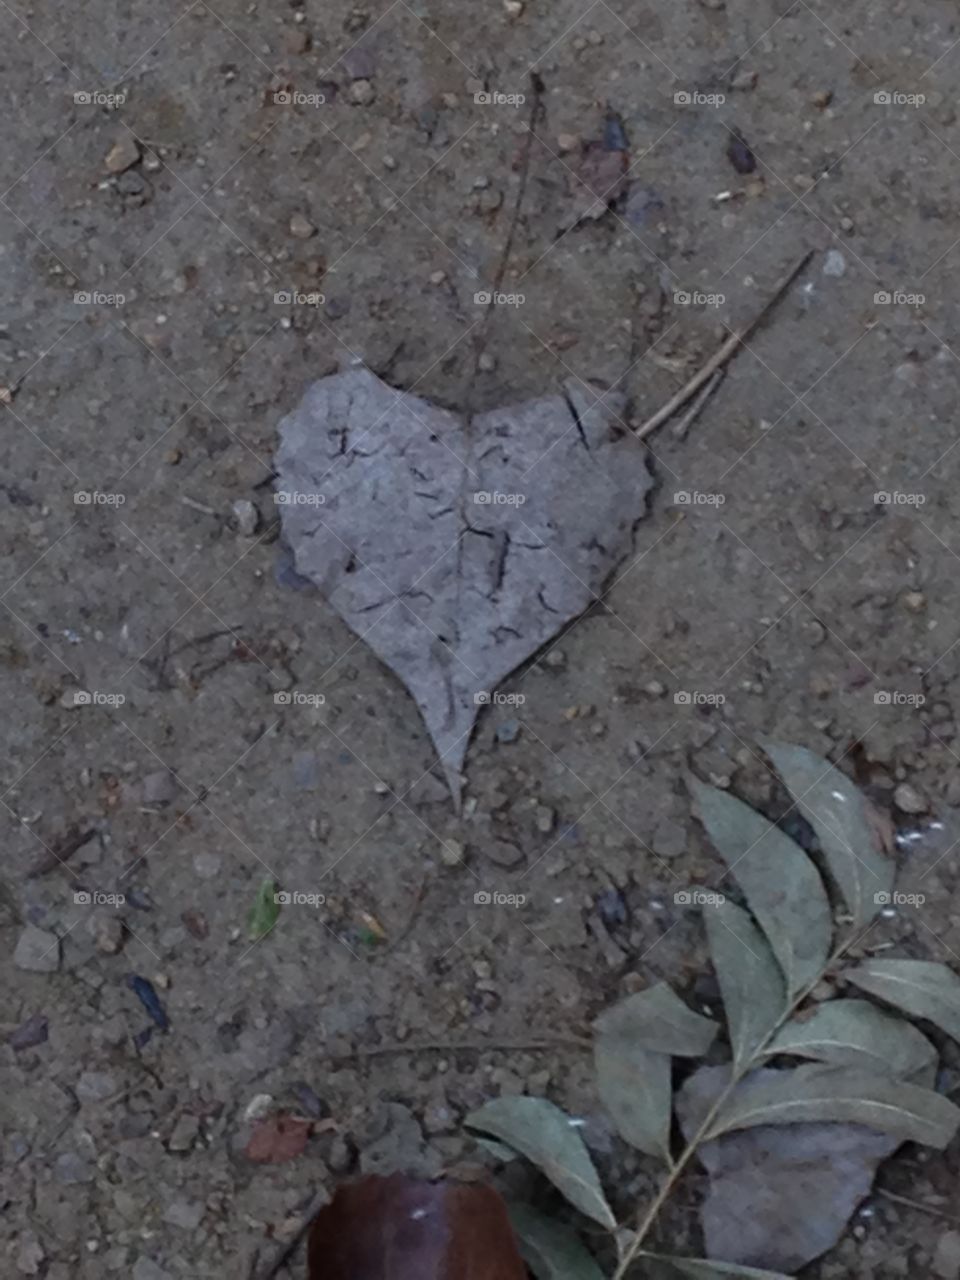 Heart leaf on path 